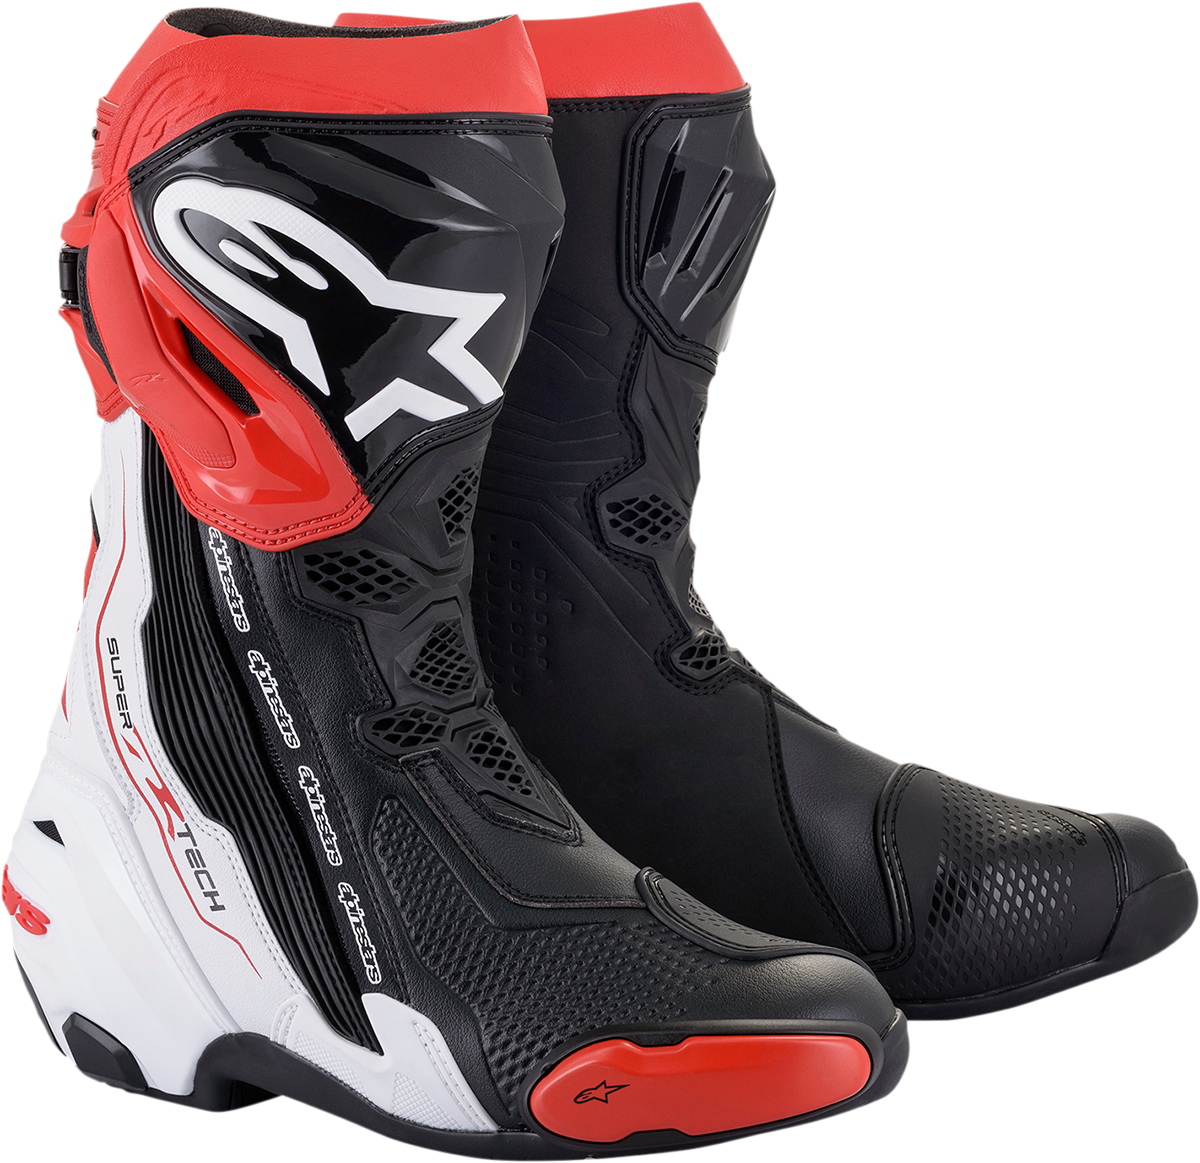 ALPINESTARS Supertech R Boots - Black/White/Red - US 10.5 / EU 45 2220021-123-45